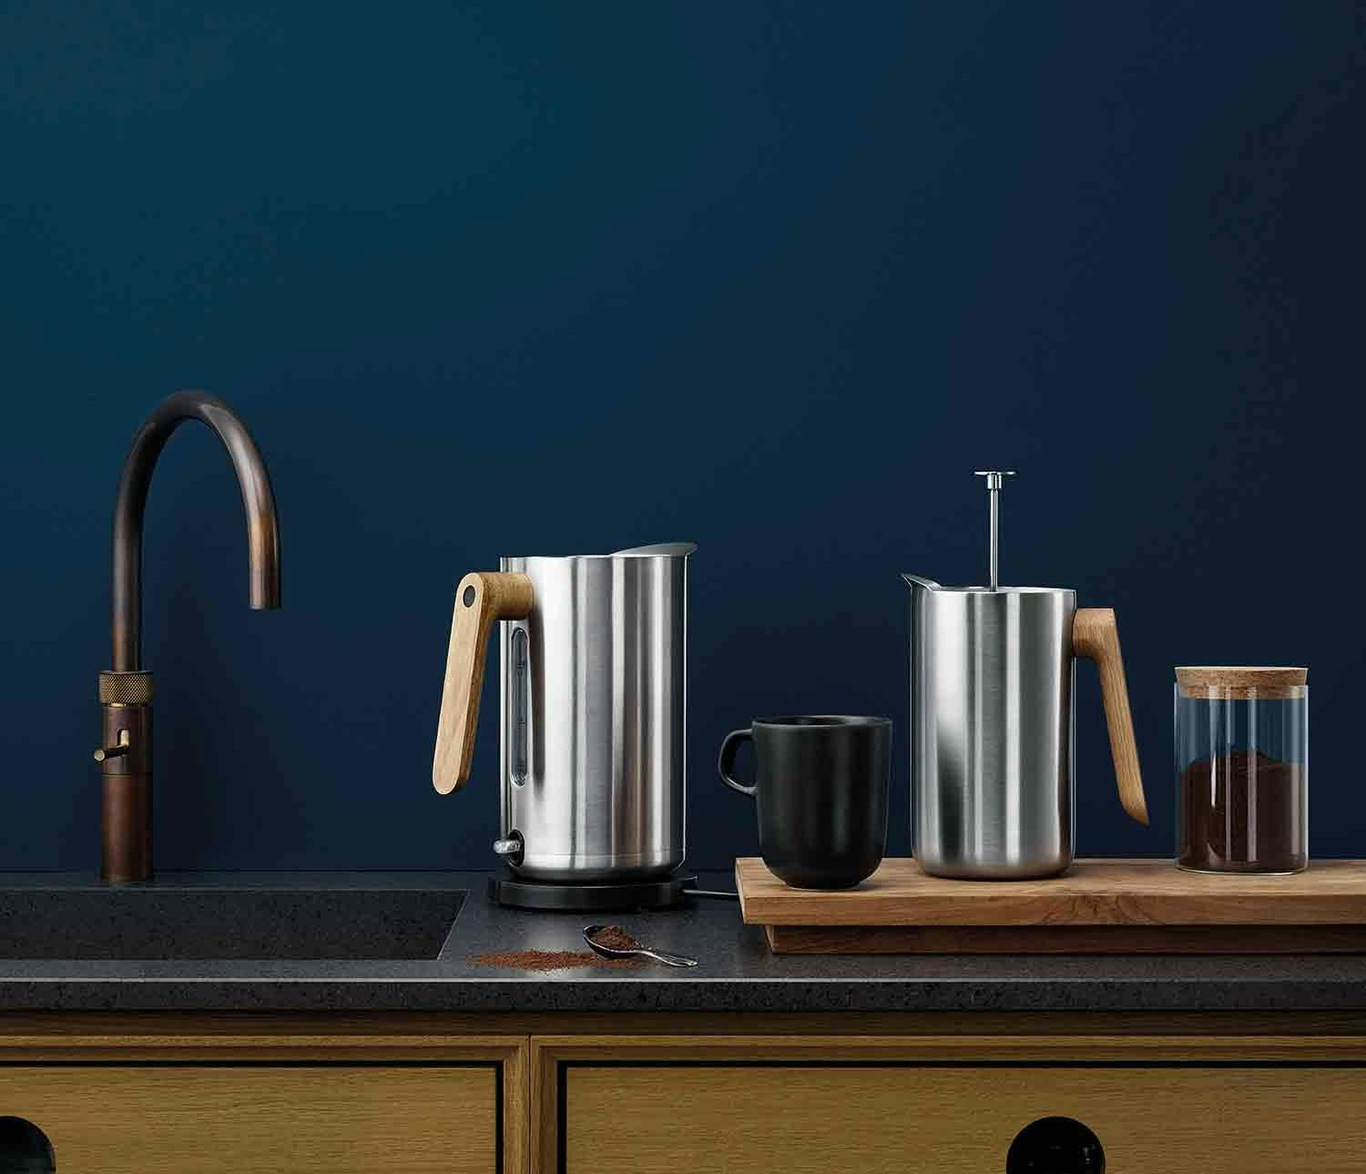 https://royaldesign.com/image/2/eva-solo-nordic-kitchen-thermo-cafetiere-1-l-3?w=800&quality=80